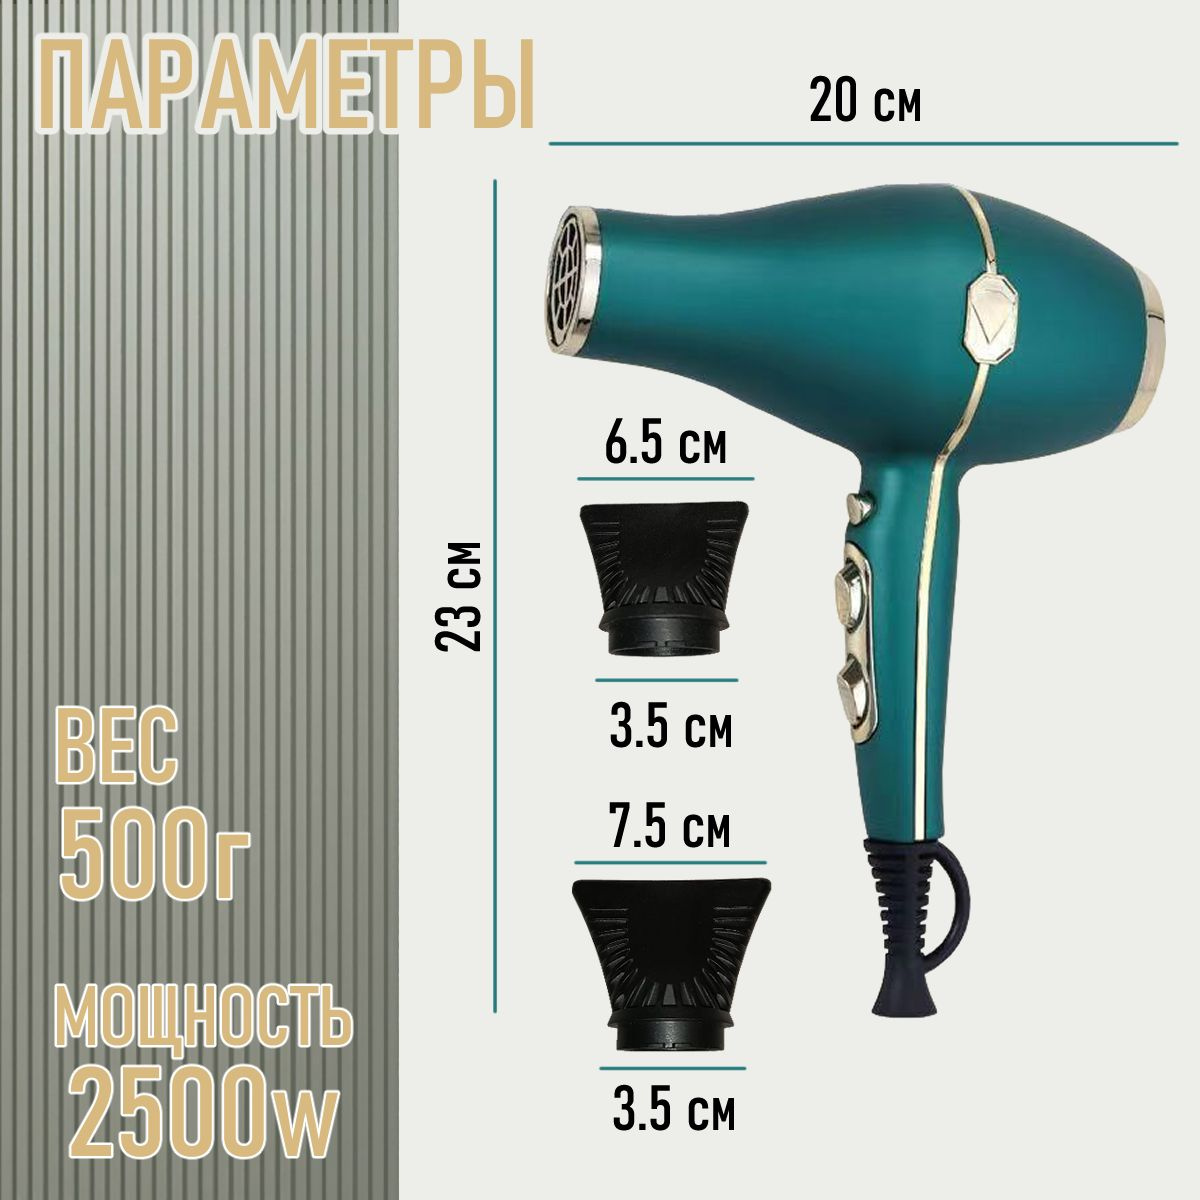 https://www.ozon.ru/product/fen-vostore-cr-7722-green-1423641446/